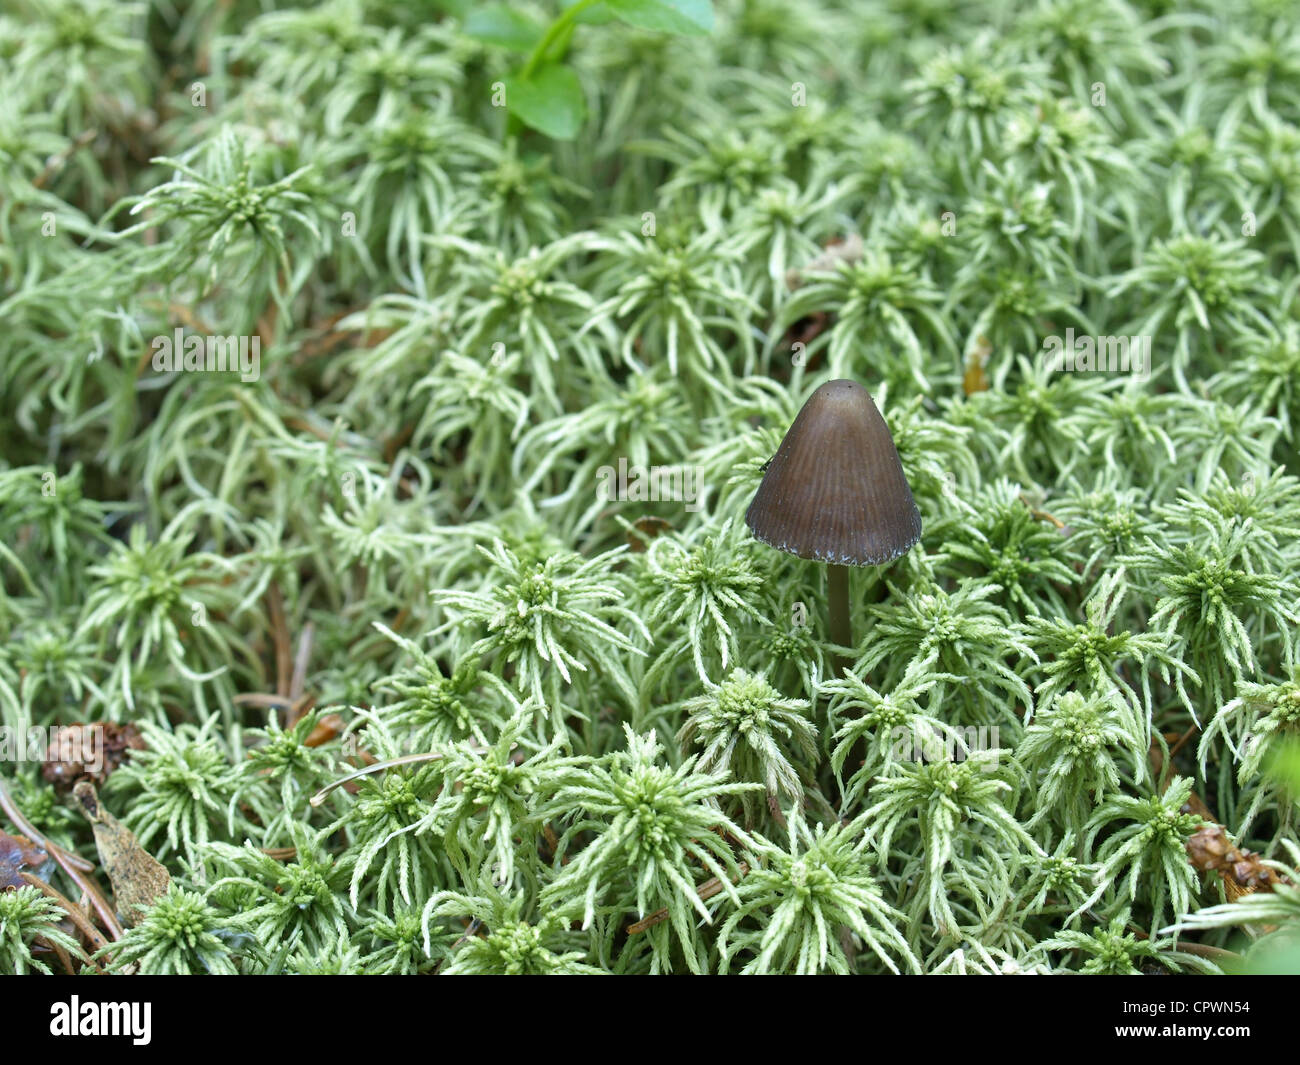 peat moss / Sphagnum with bonnet / Mycena Stock Photo